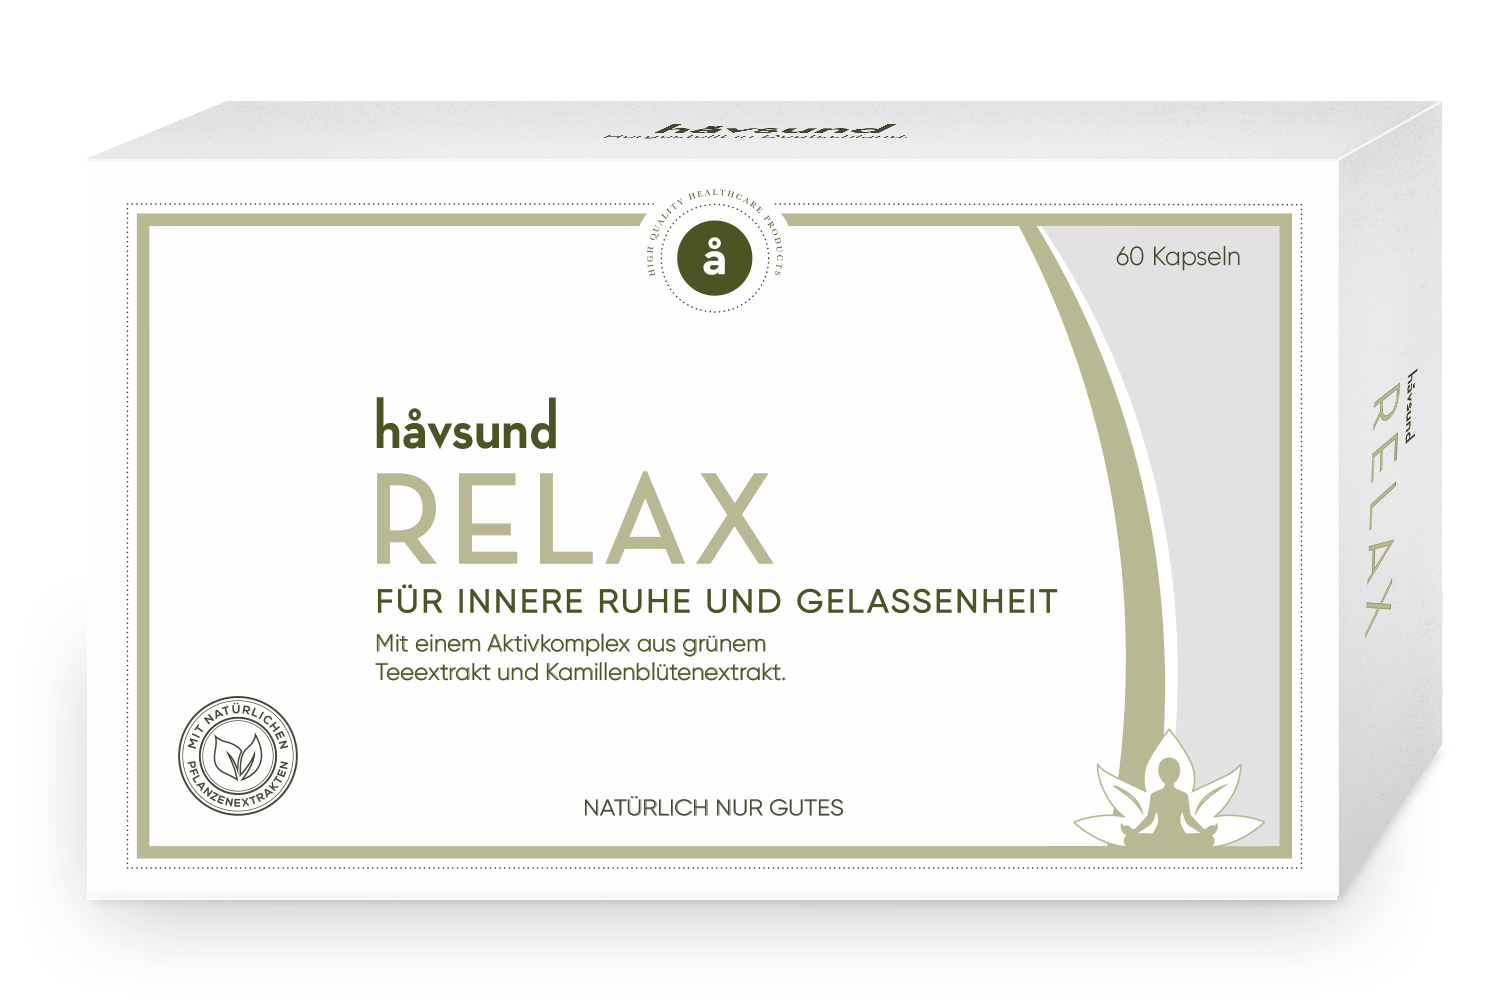 håvsund Relax product image